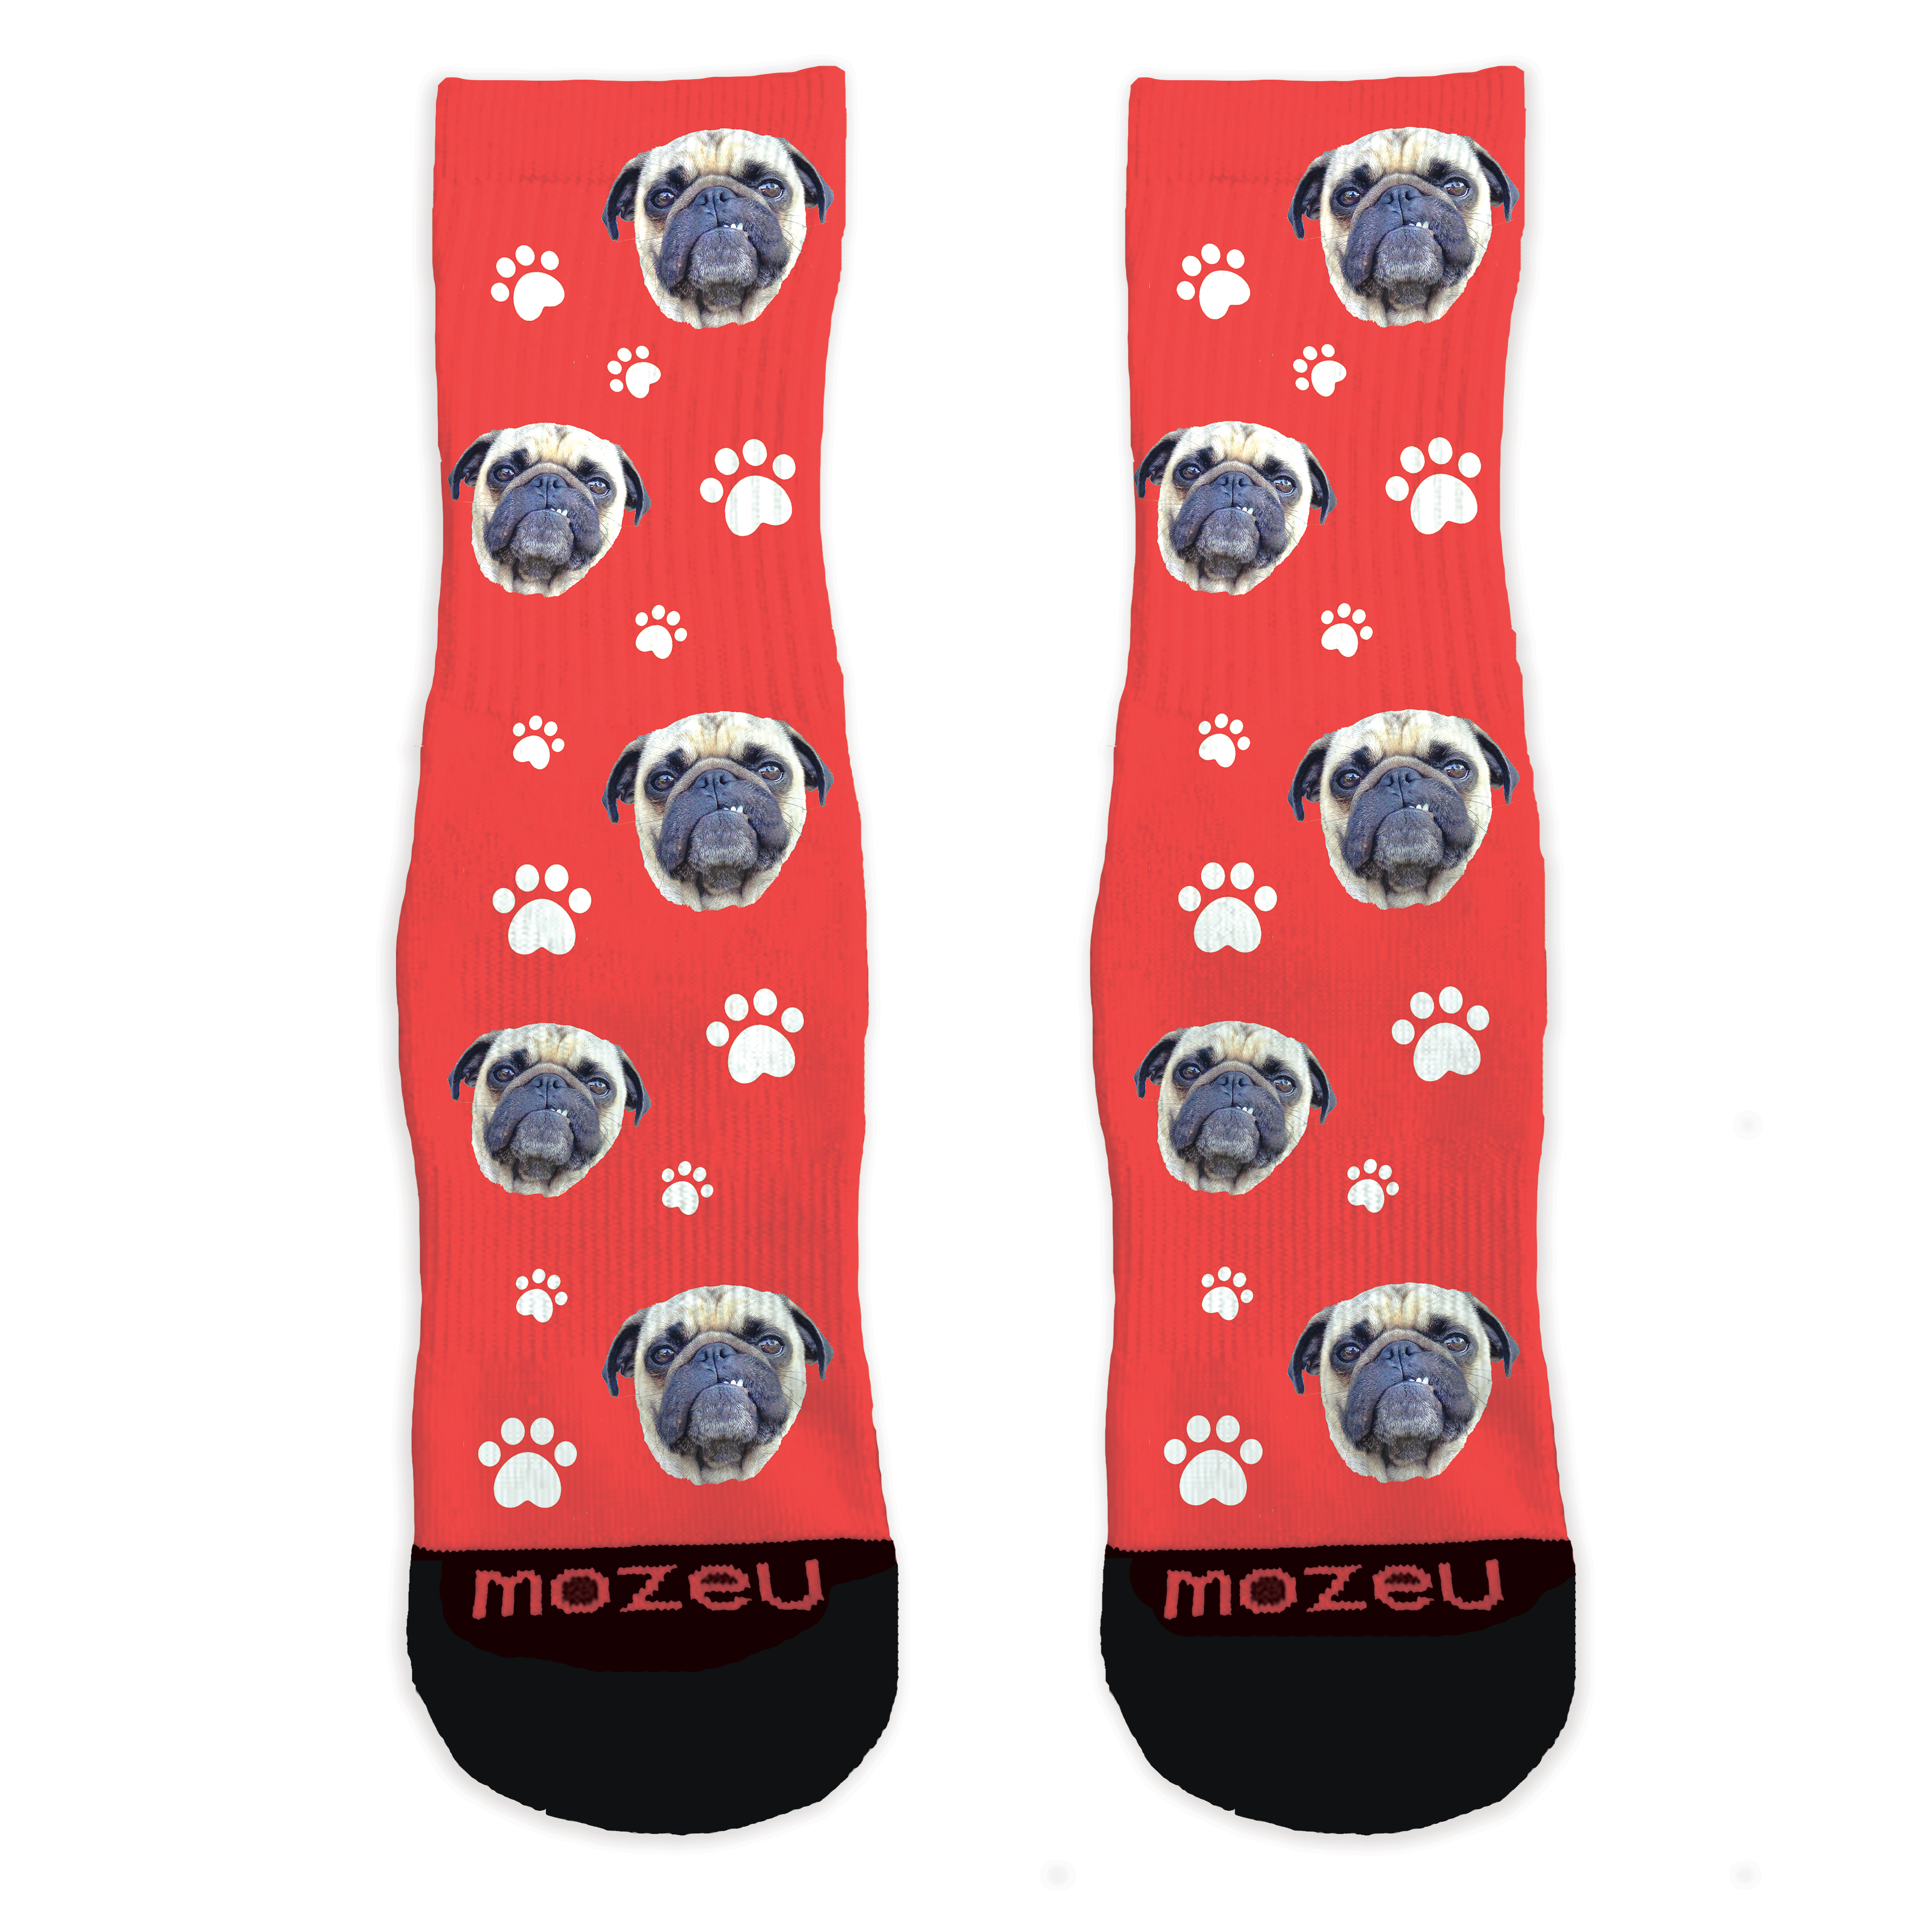 Custom Pup Socks Mozeu Socks